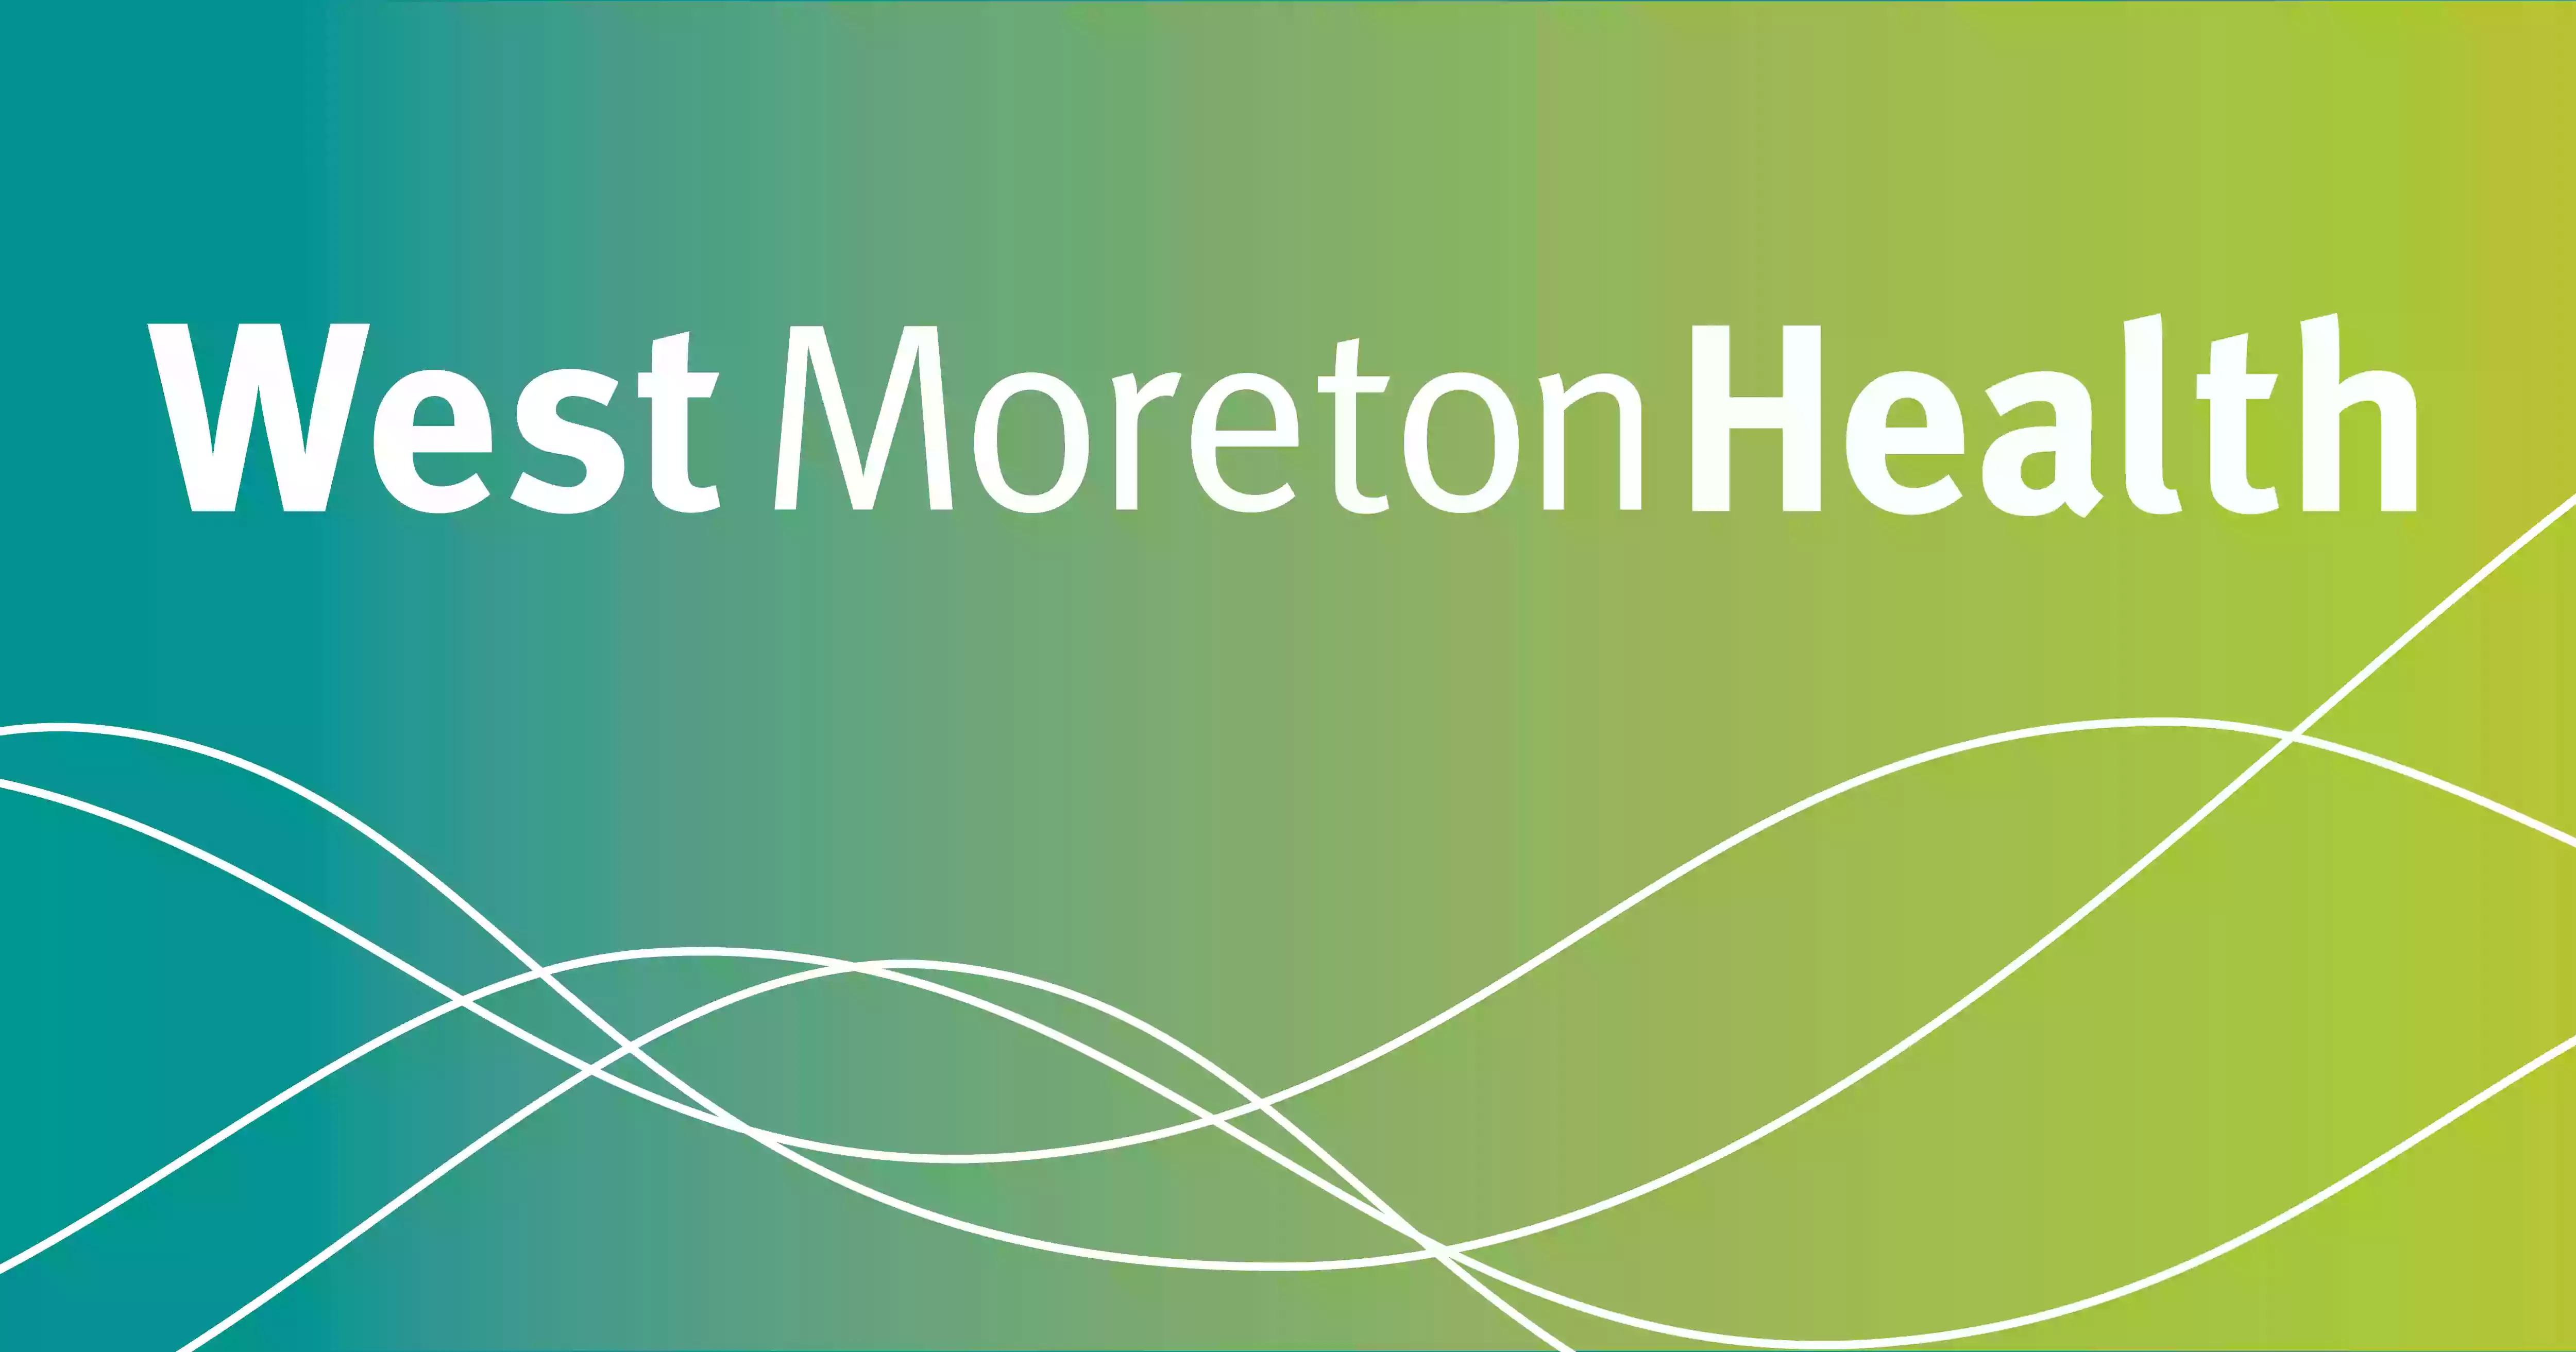 West Moreton Hospital & Health Service